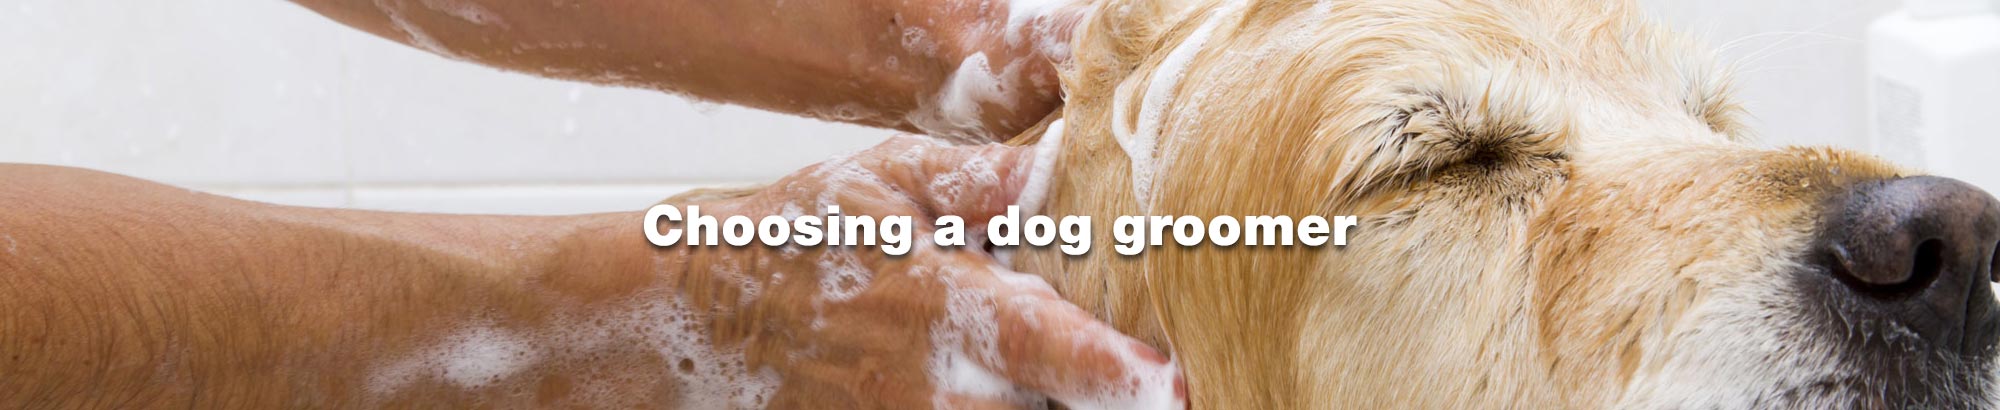 Choosing a dog groomer